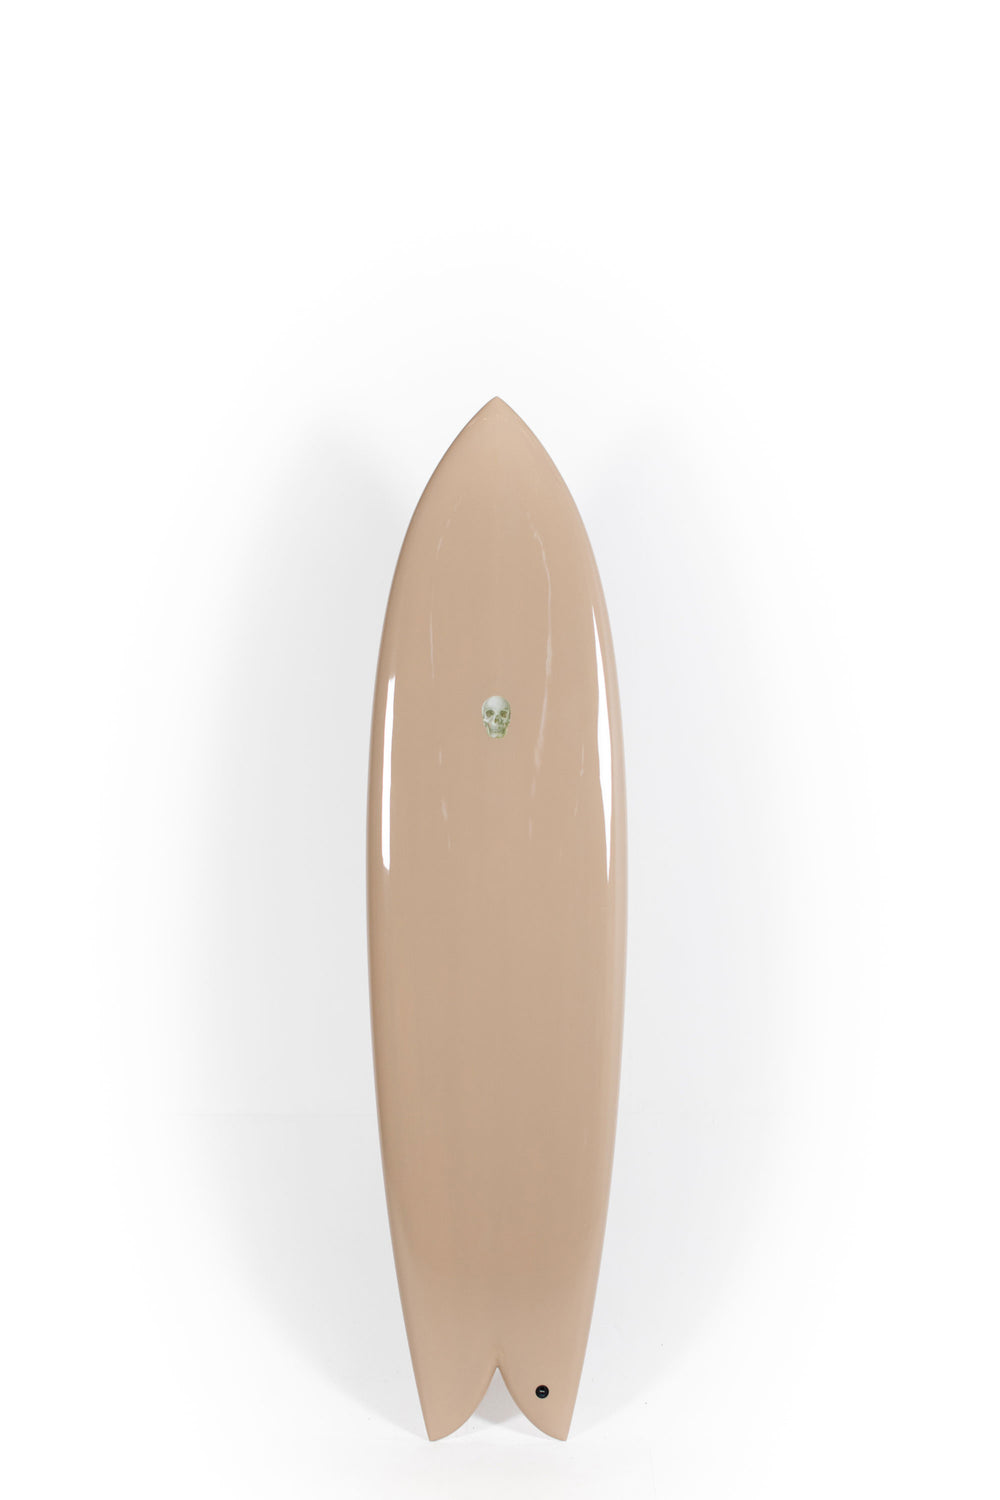 Pukas Surf Shop - Christenson Surfboards - LONG PHISH - 6'10